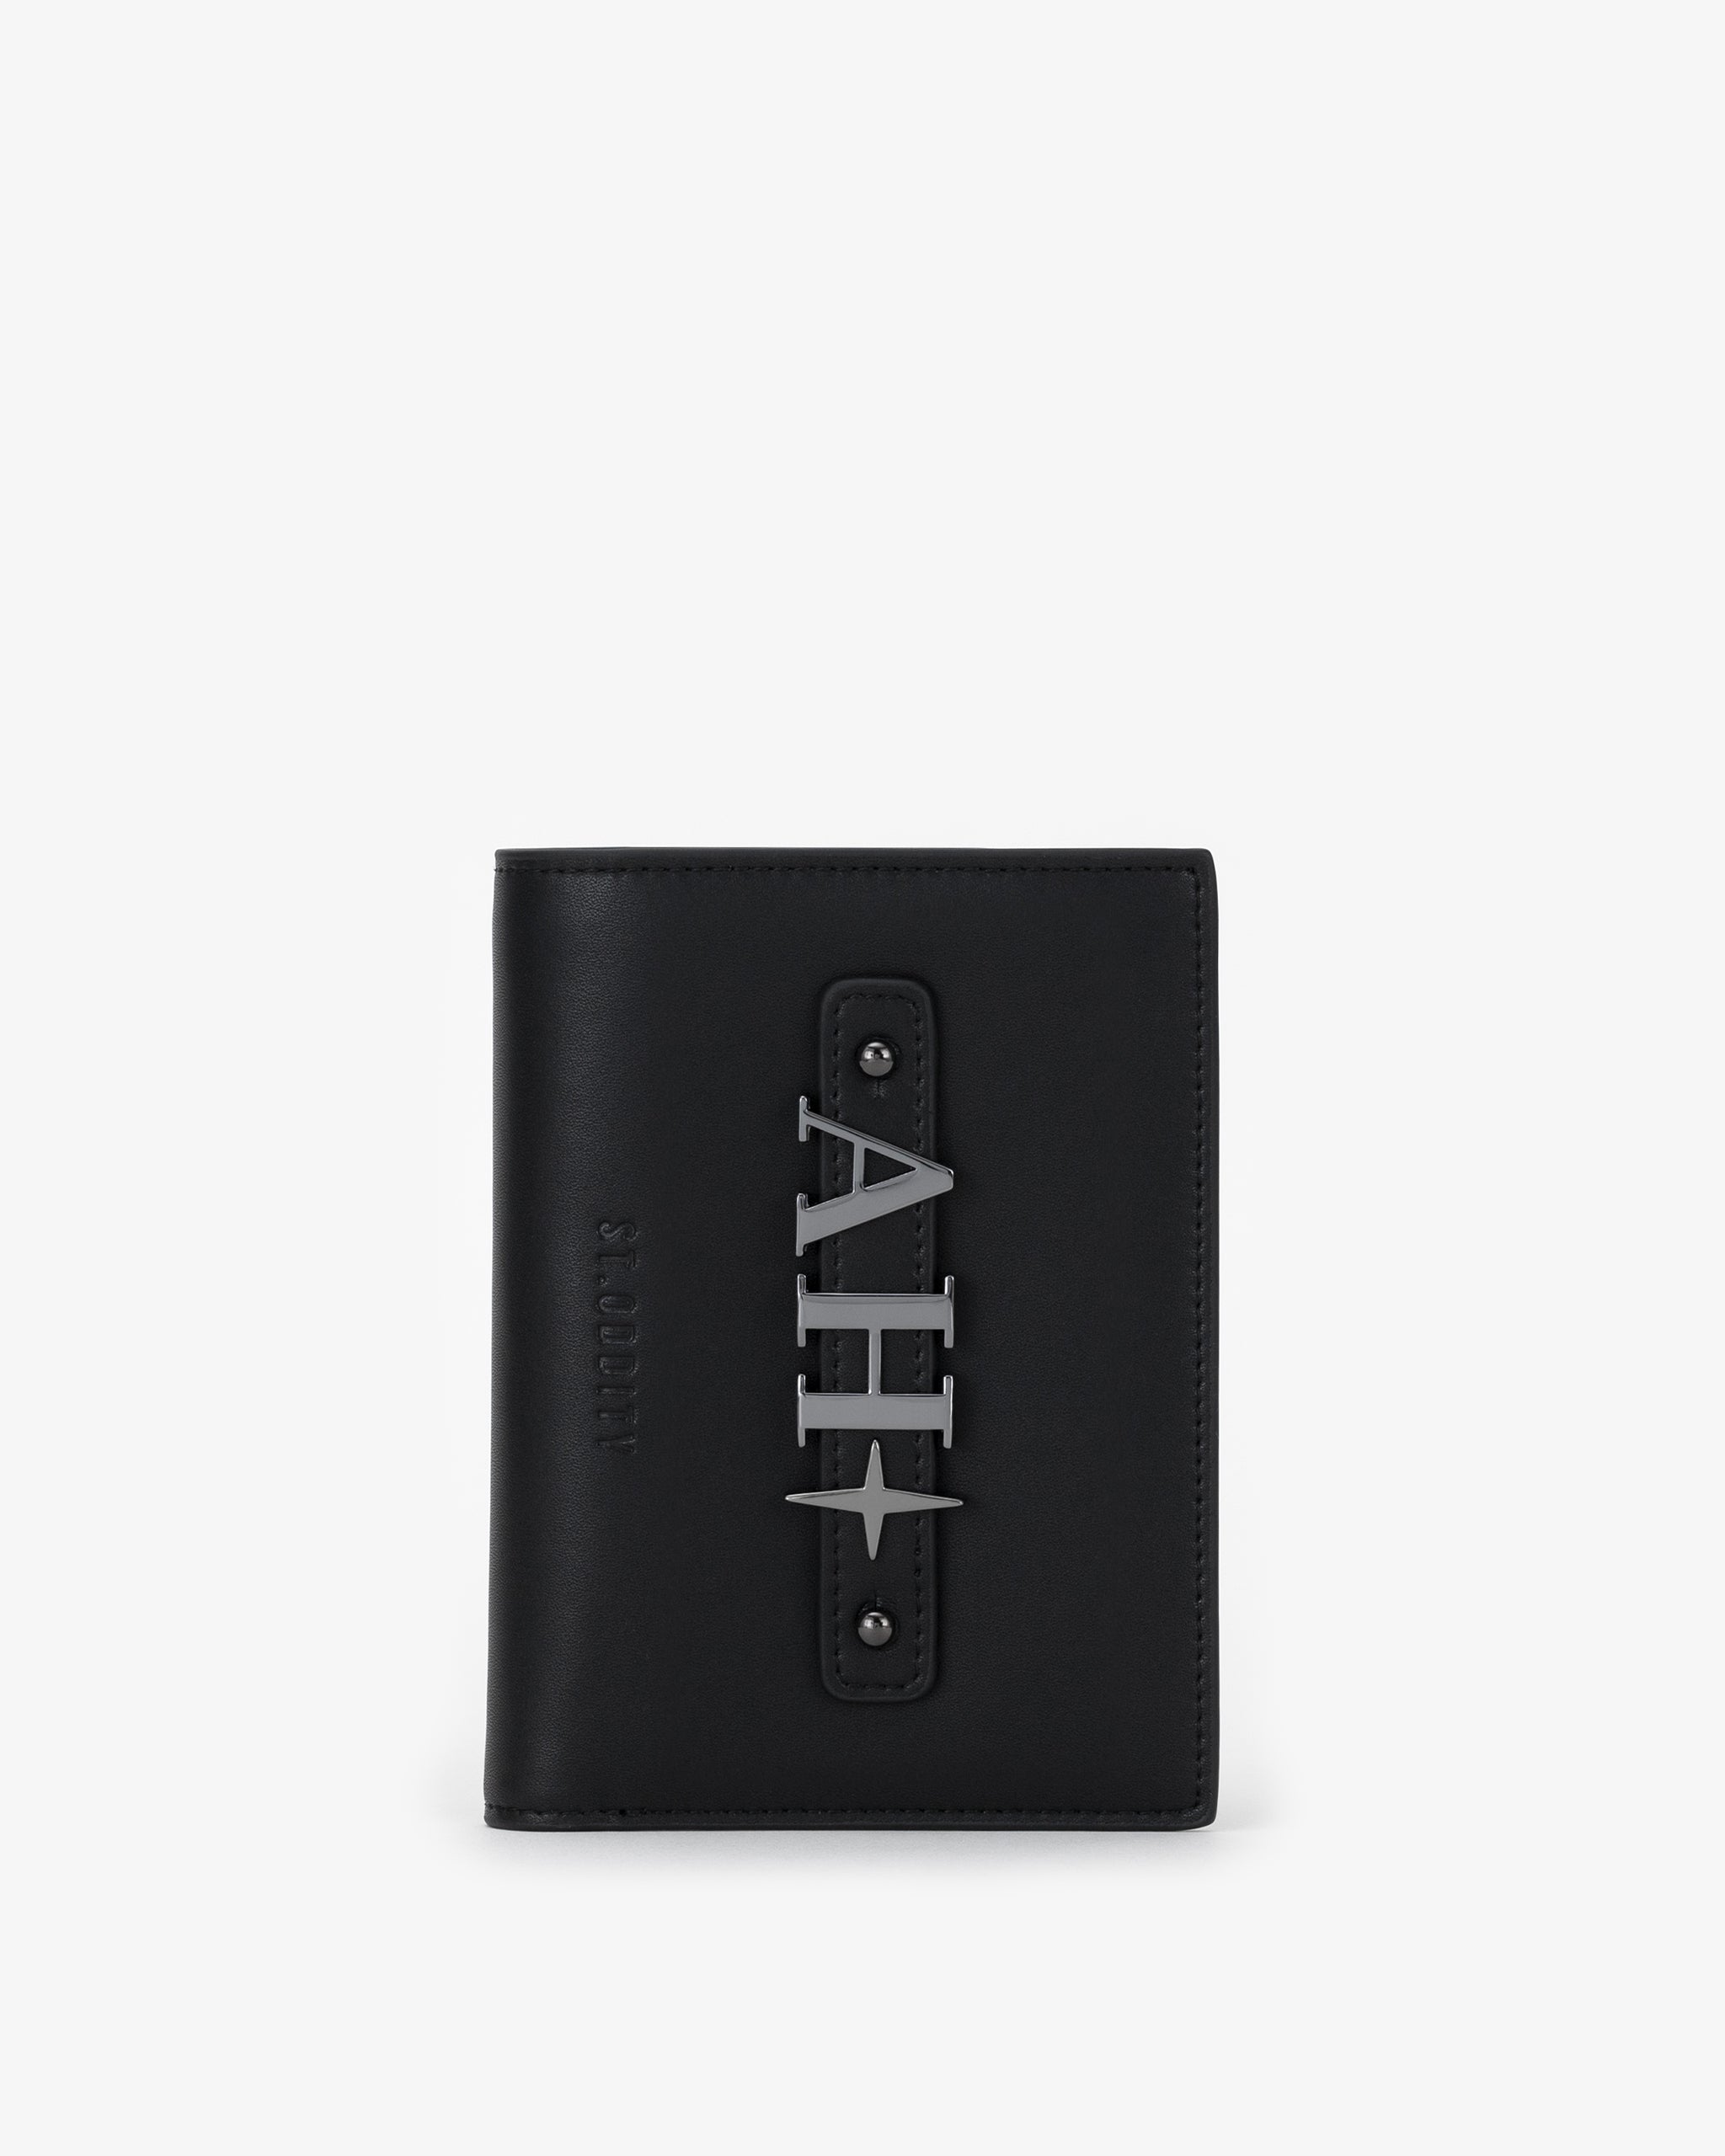 Travel Wallet in Black/Gunmetal with Personalised Hardware